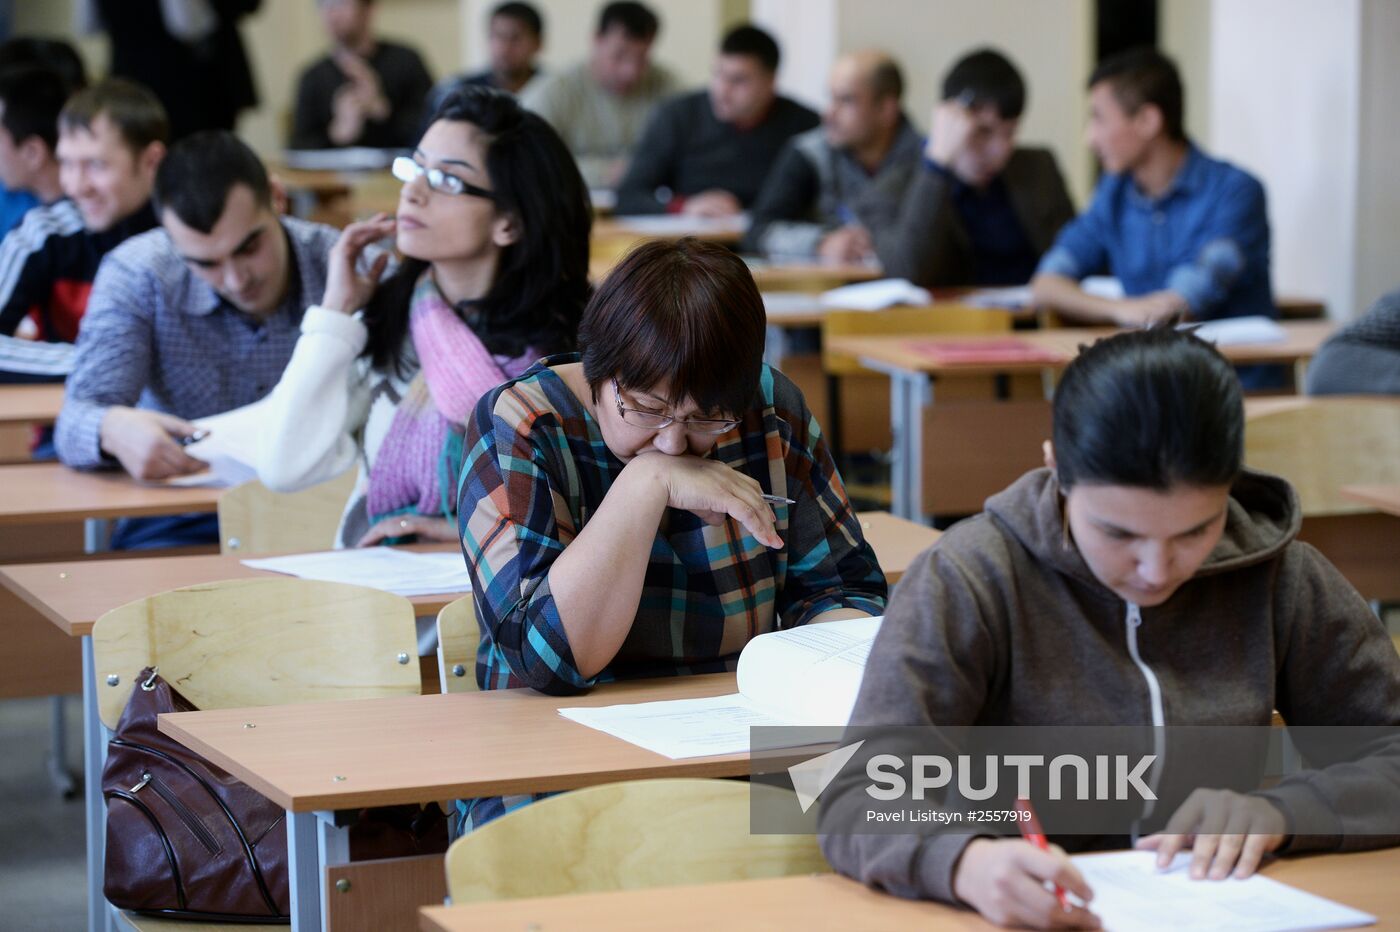 Taking exams at migrant testing center